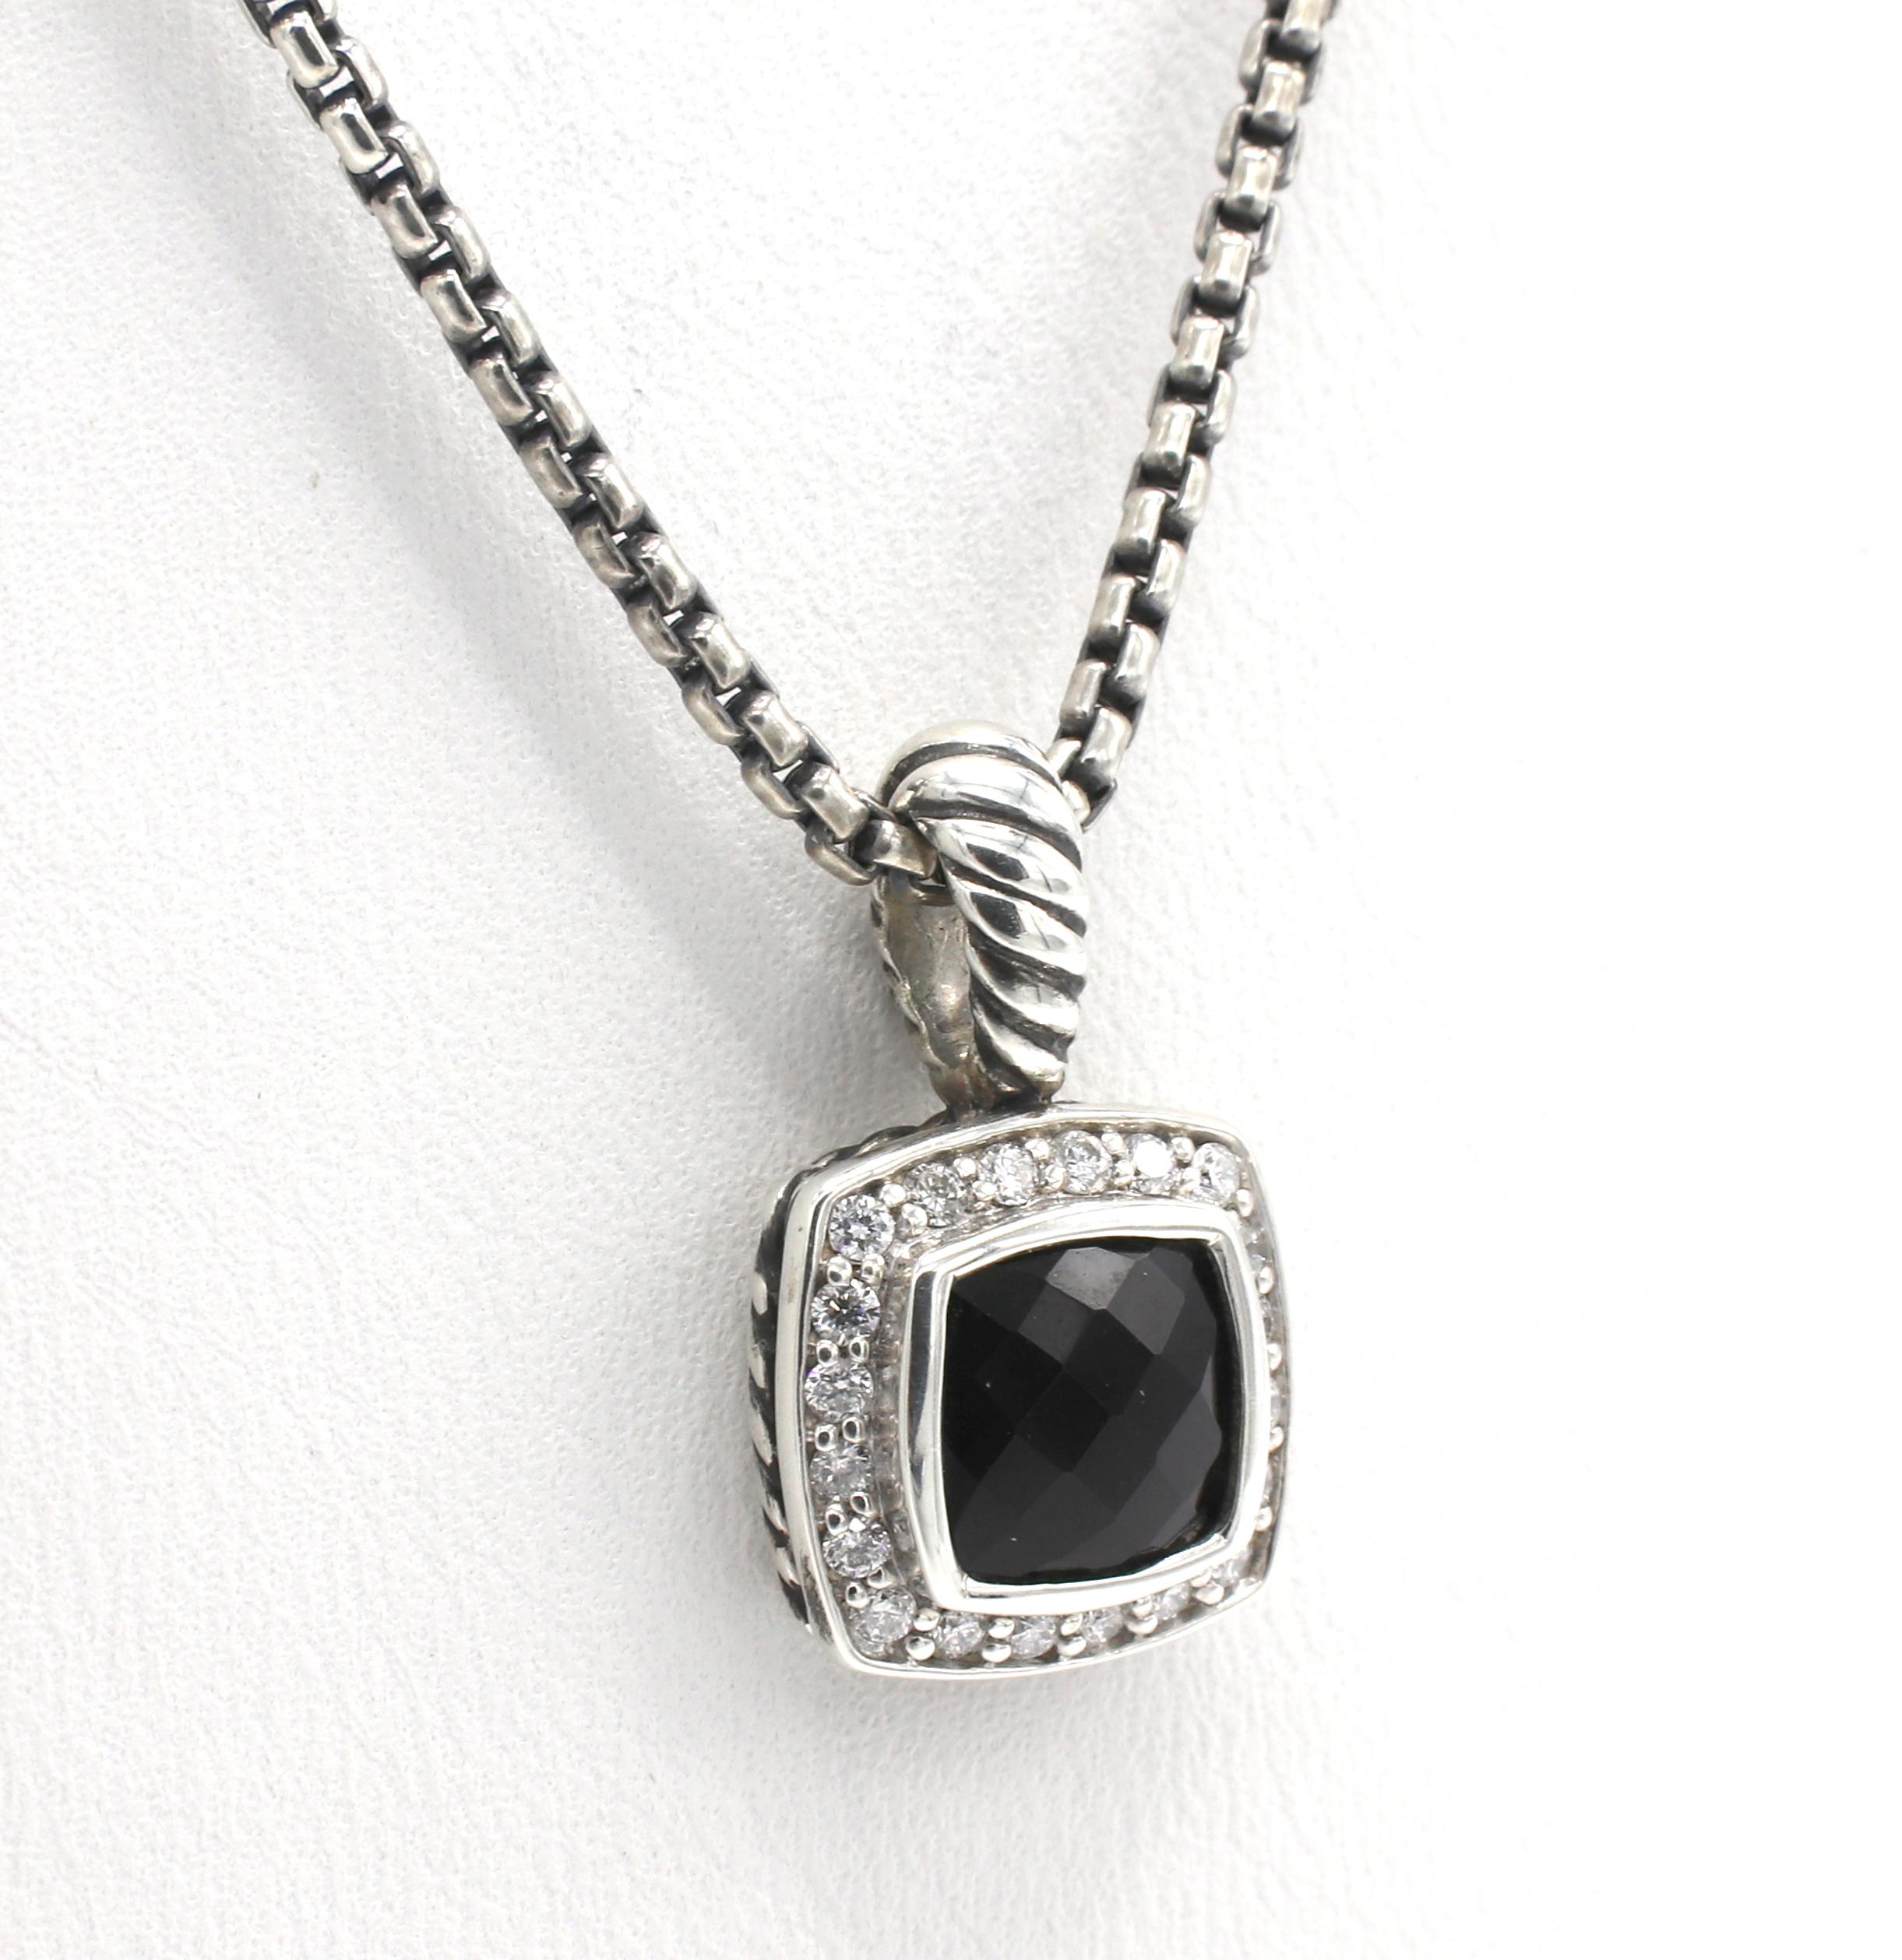 David Yurman Petite Albion Black Onyx & Diamond Pendant Necklace Sterling Silver
Metal: Sterling silver
Weight: 9.53 grams
Pendant: 11.5 x 11.5mm
Onyx: 7 x 7mm
Diamonds: 0.17 CTW G VS  round brilliant diamonds
Chain: 17 inch, adjustable to 16